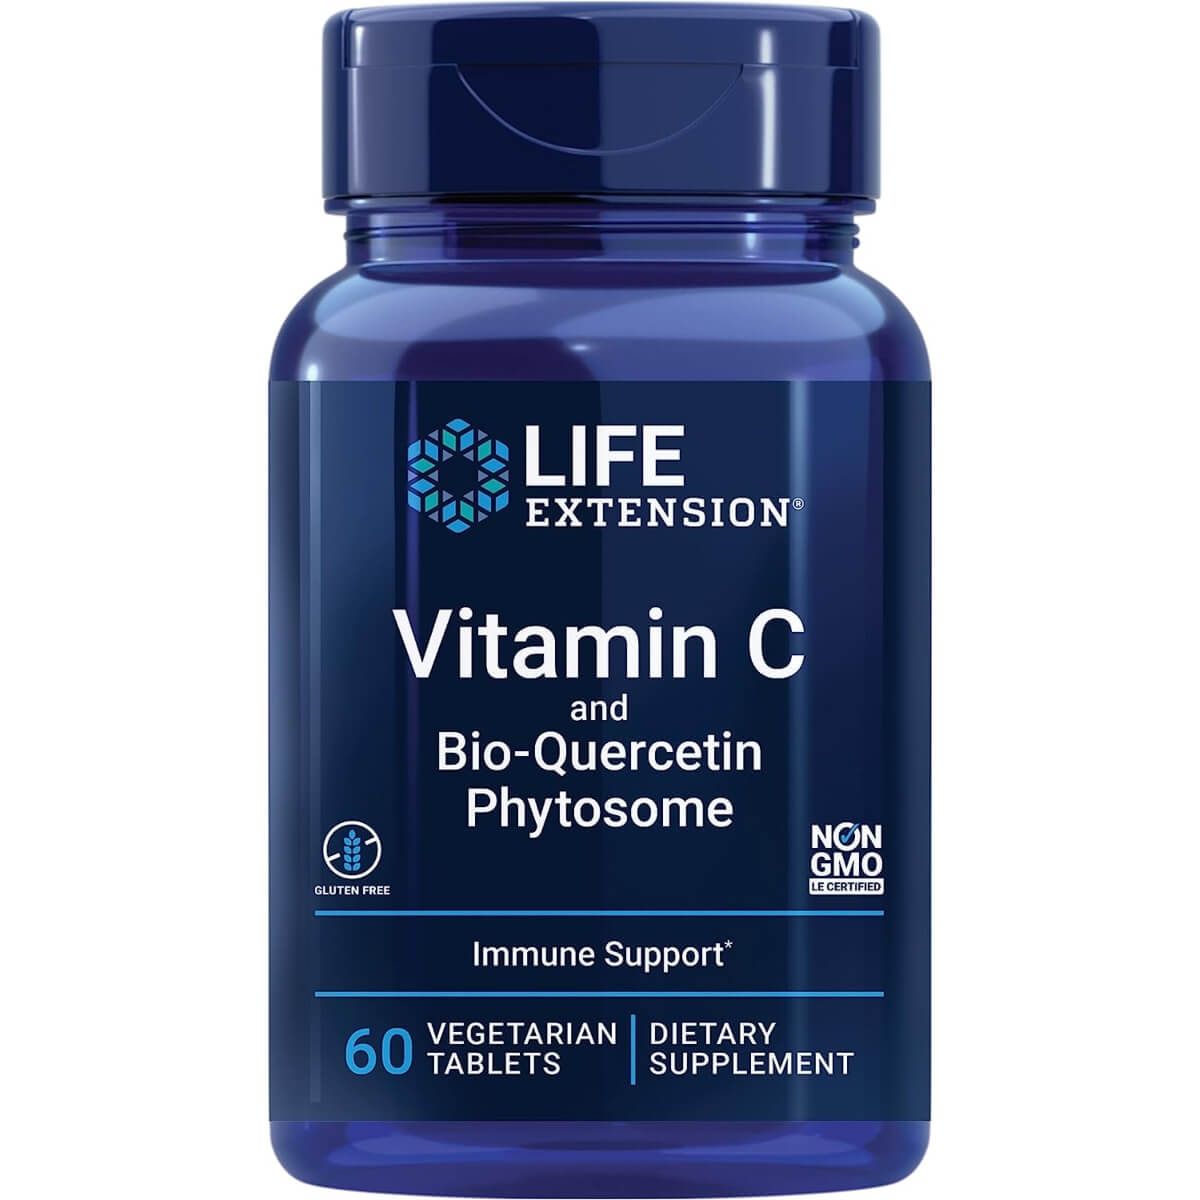 Photos - Vitamins & Minerals Life Extension Vitamin C and Bio-Quercetin Phytosome 60 Vegetarian Tablets 